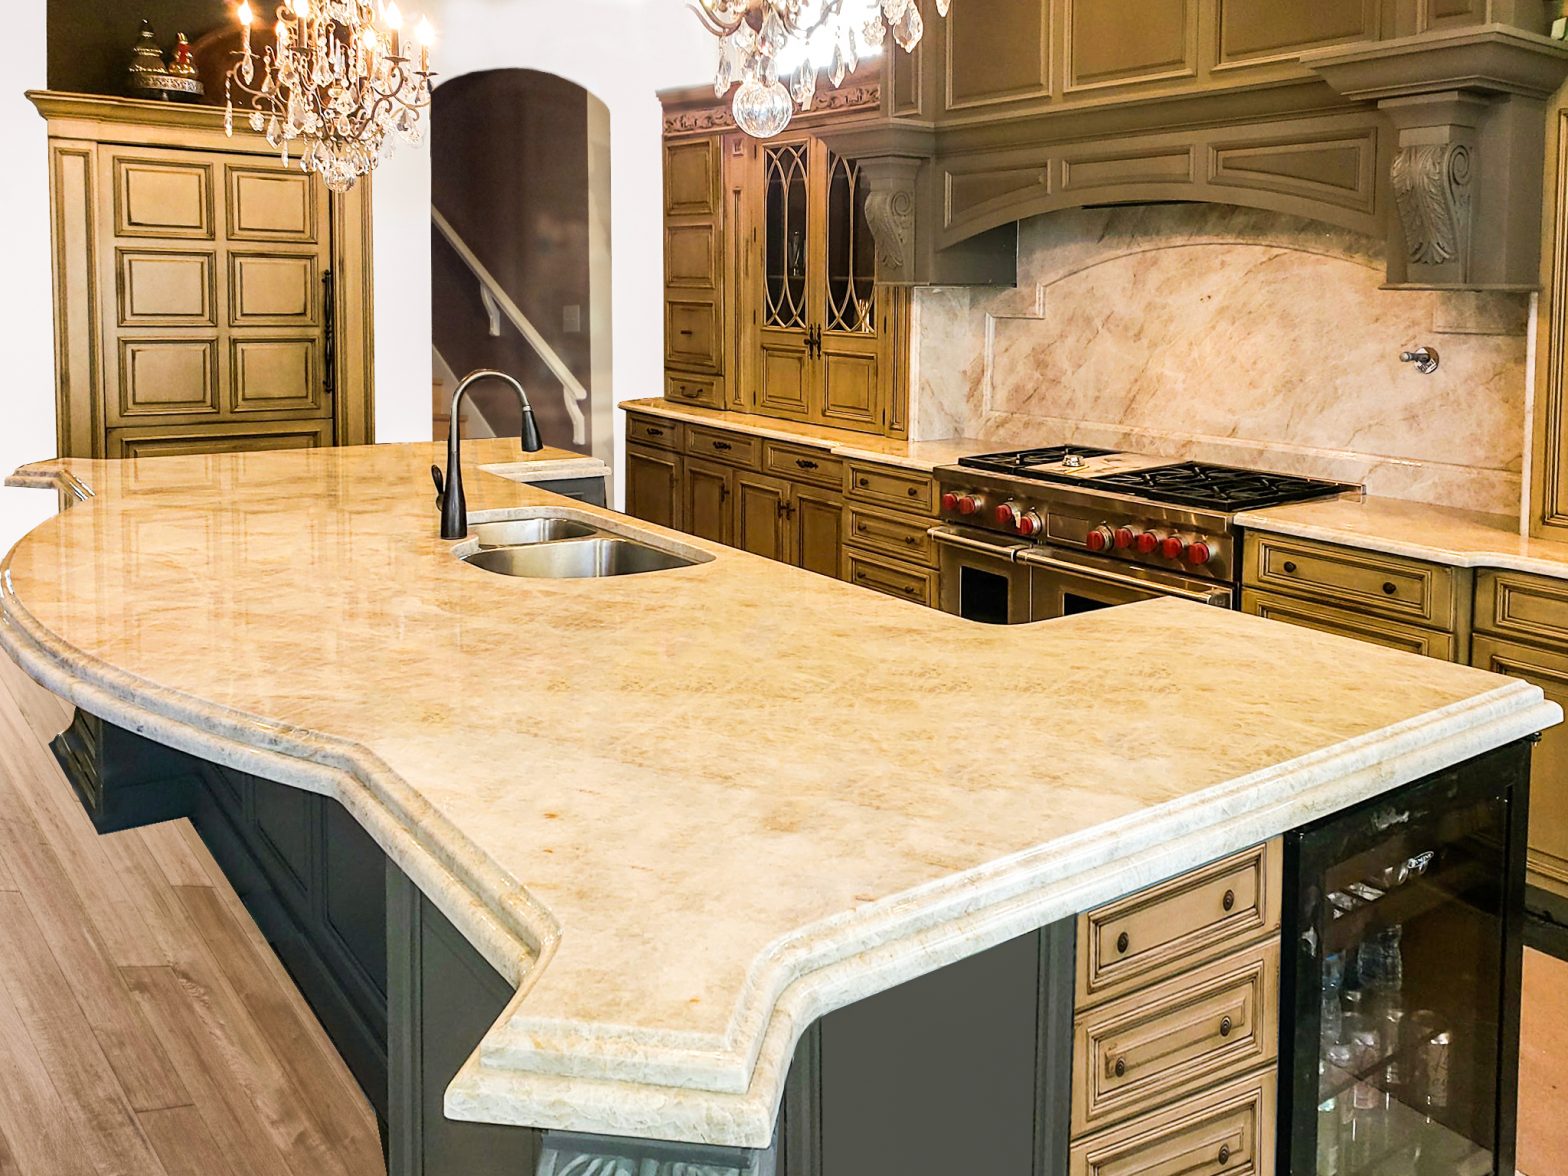 luxury kitchen in pittsburgh with granite countertops